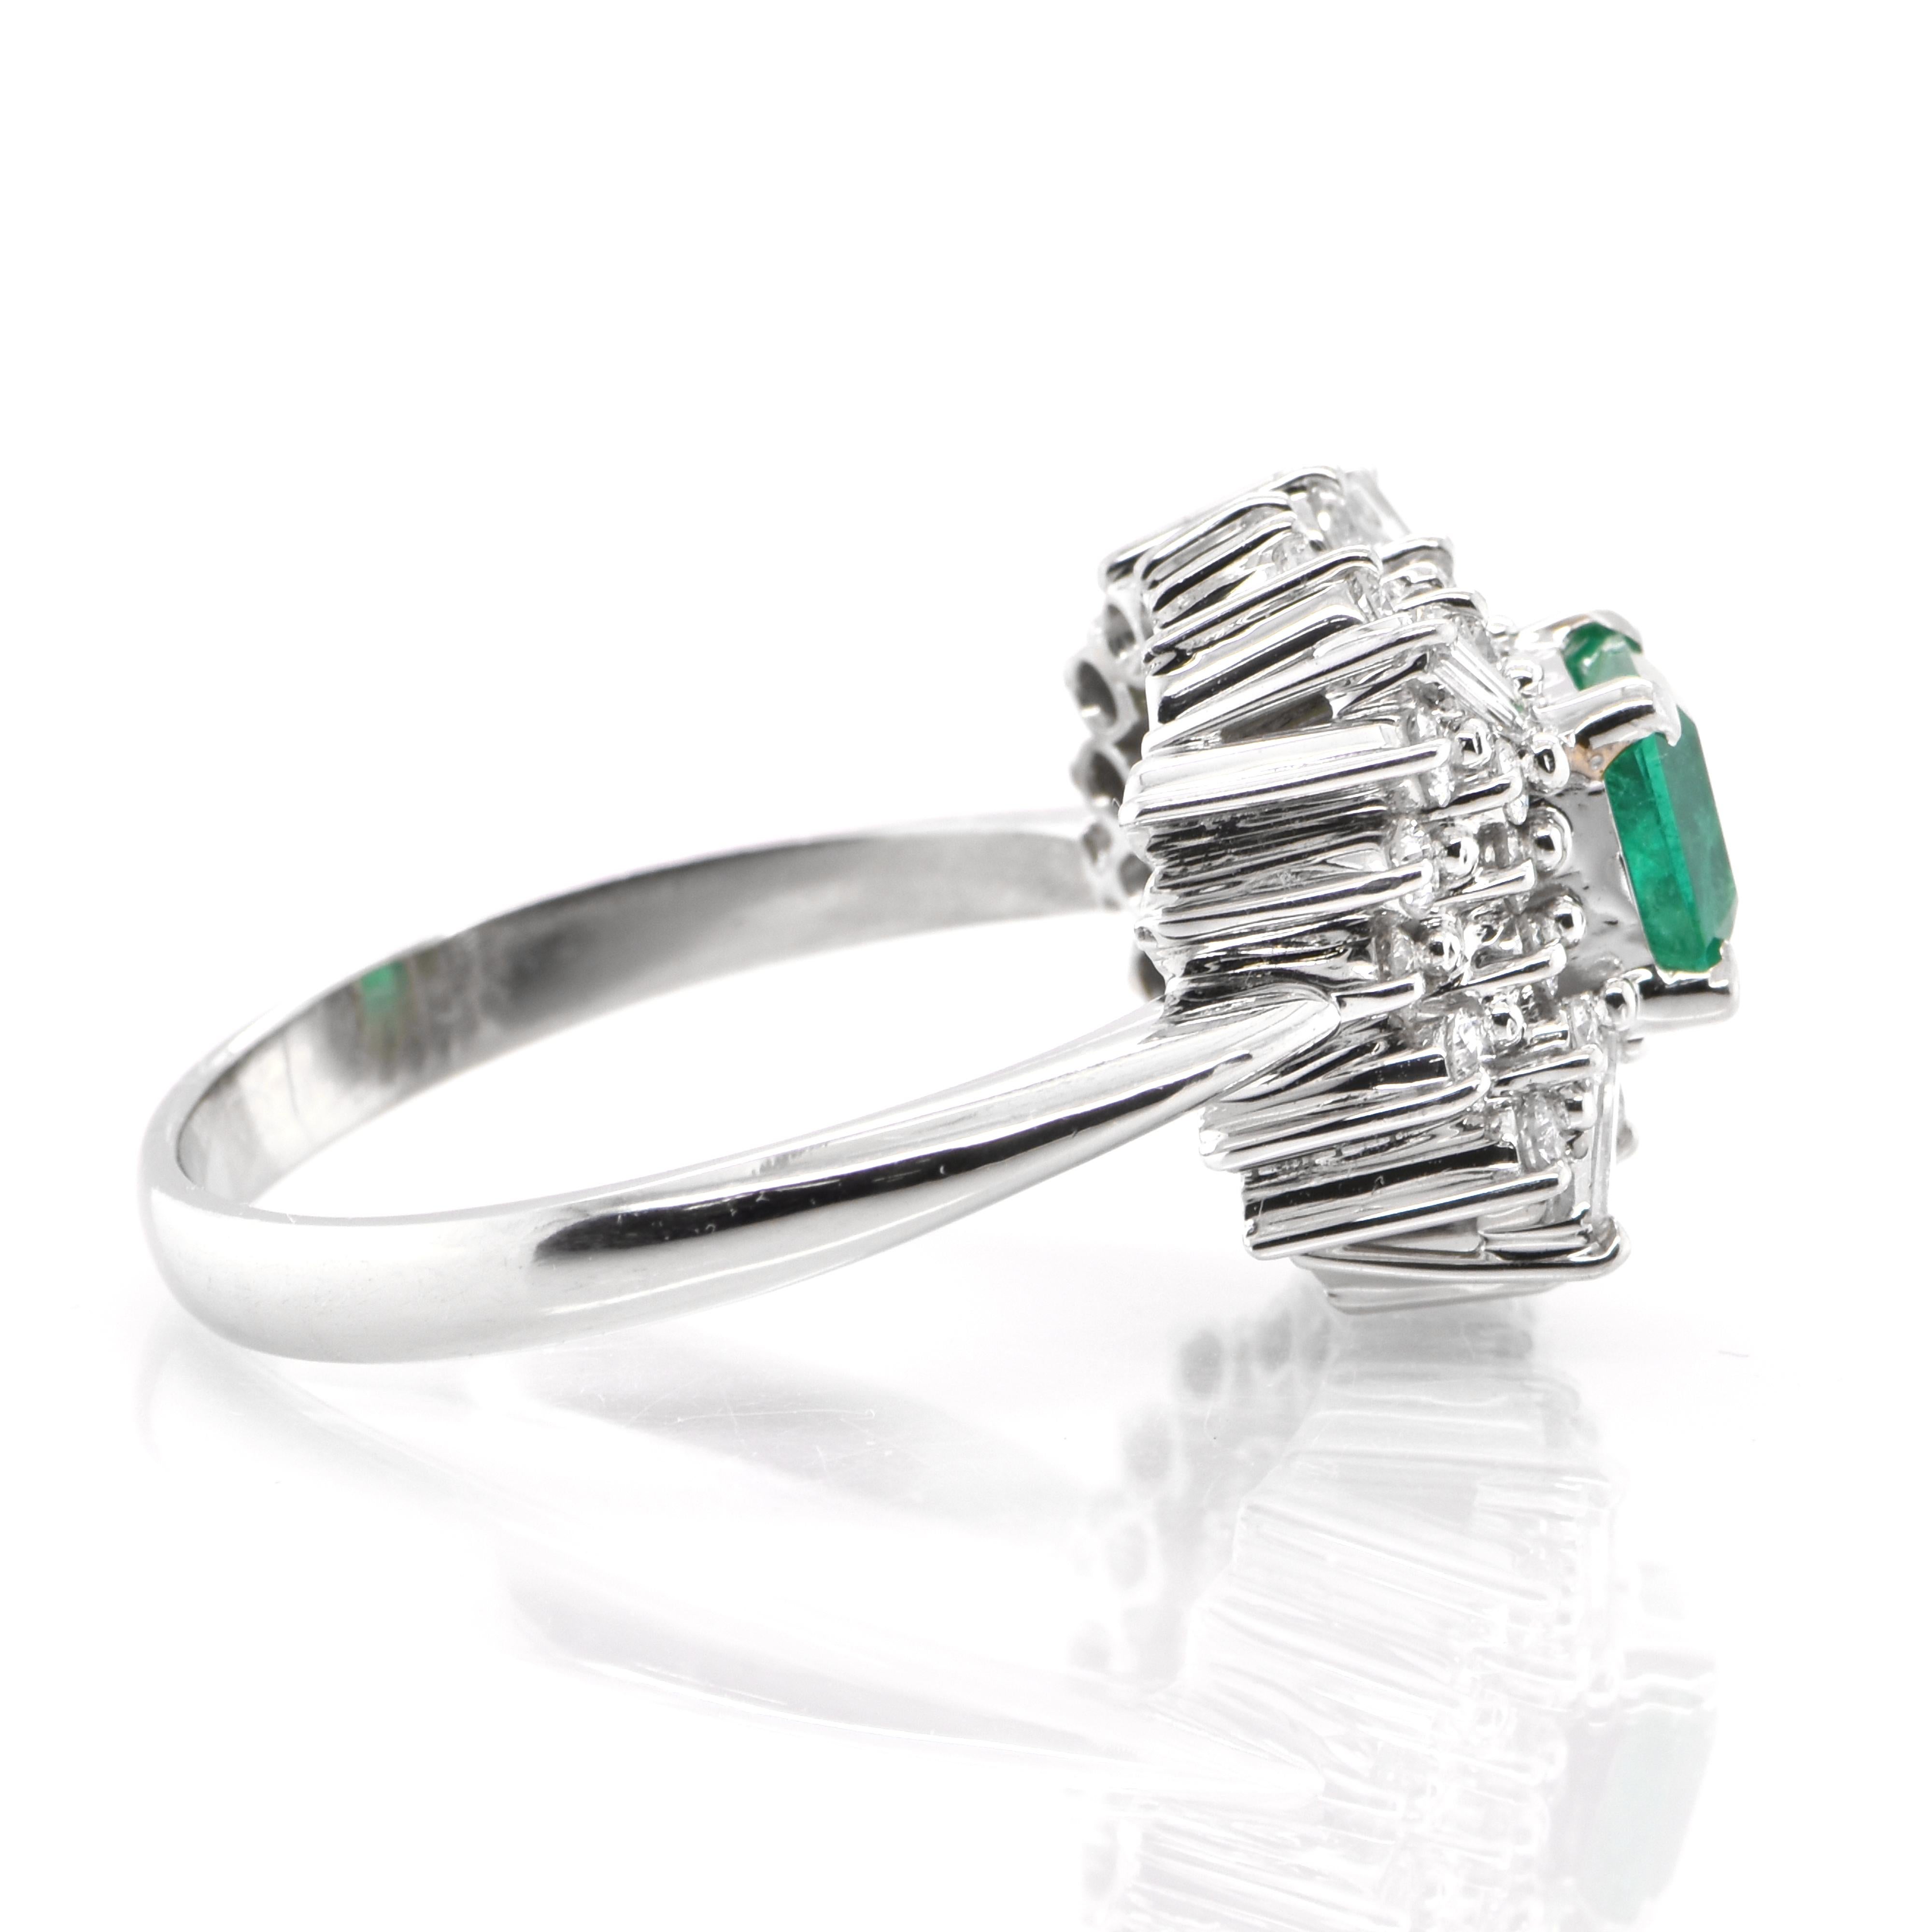 Women's Art Deco Inspired 0.41 Carat Natural Emerald and Diamond Ring Set in Platinum